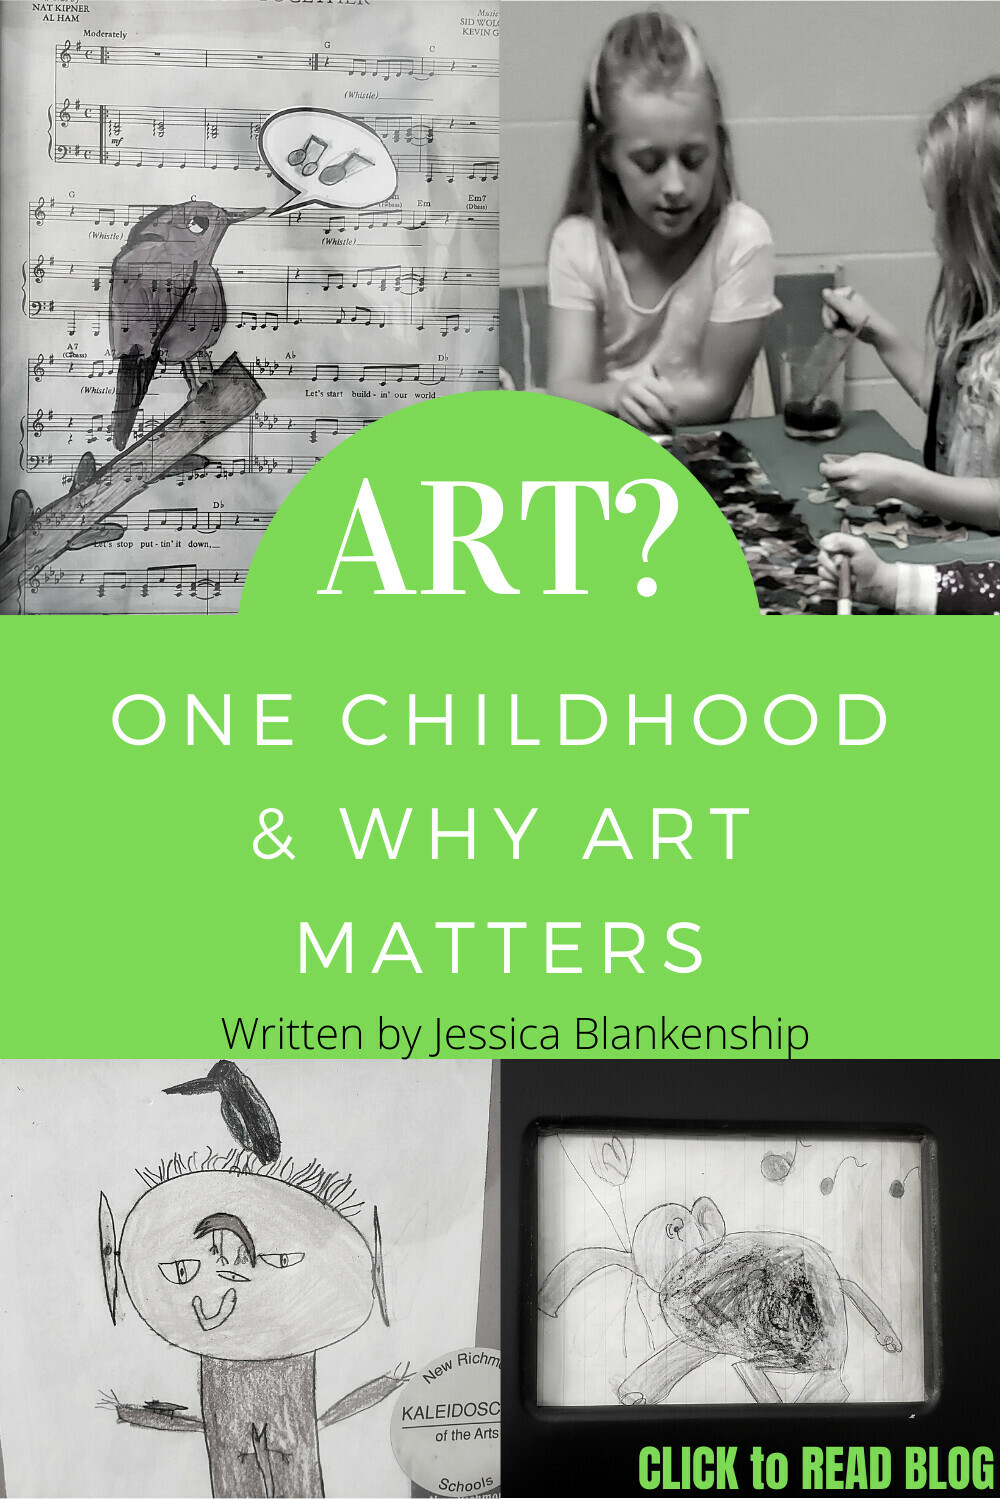 Art? One Childhood & Why Art Matters